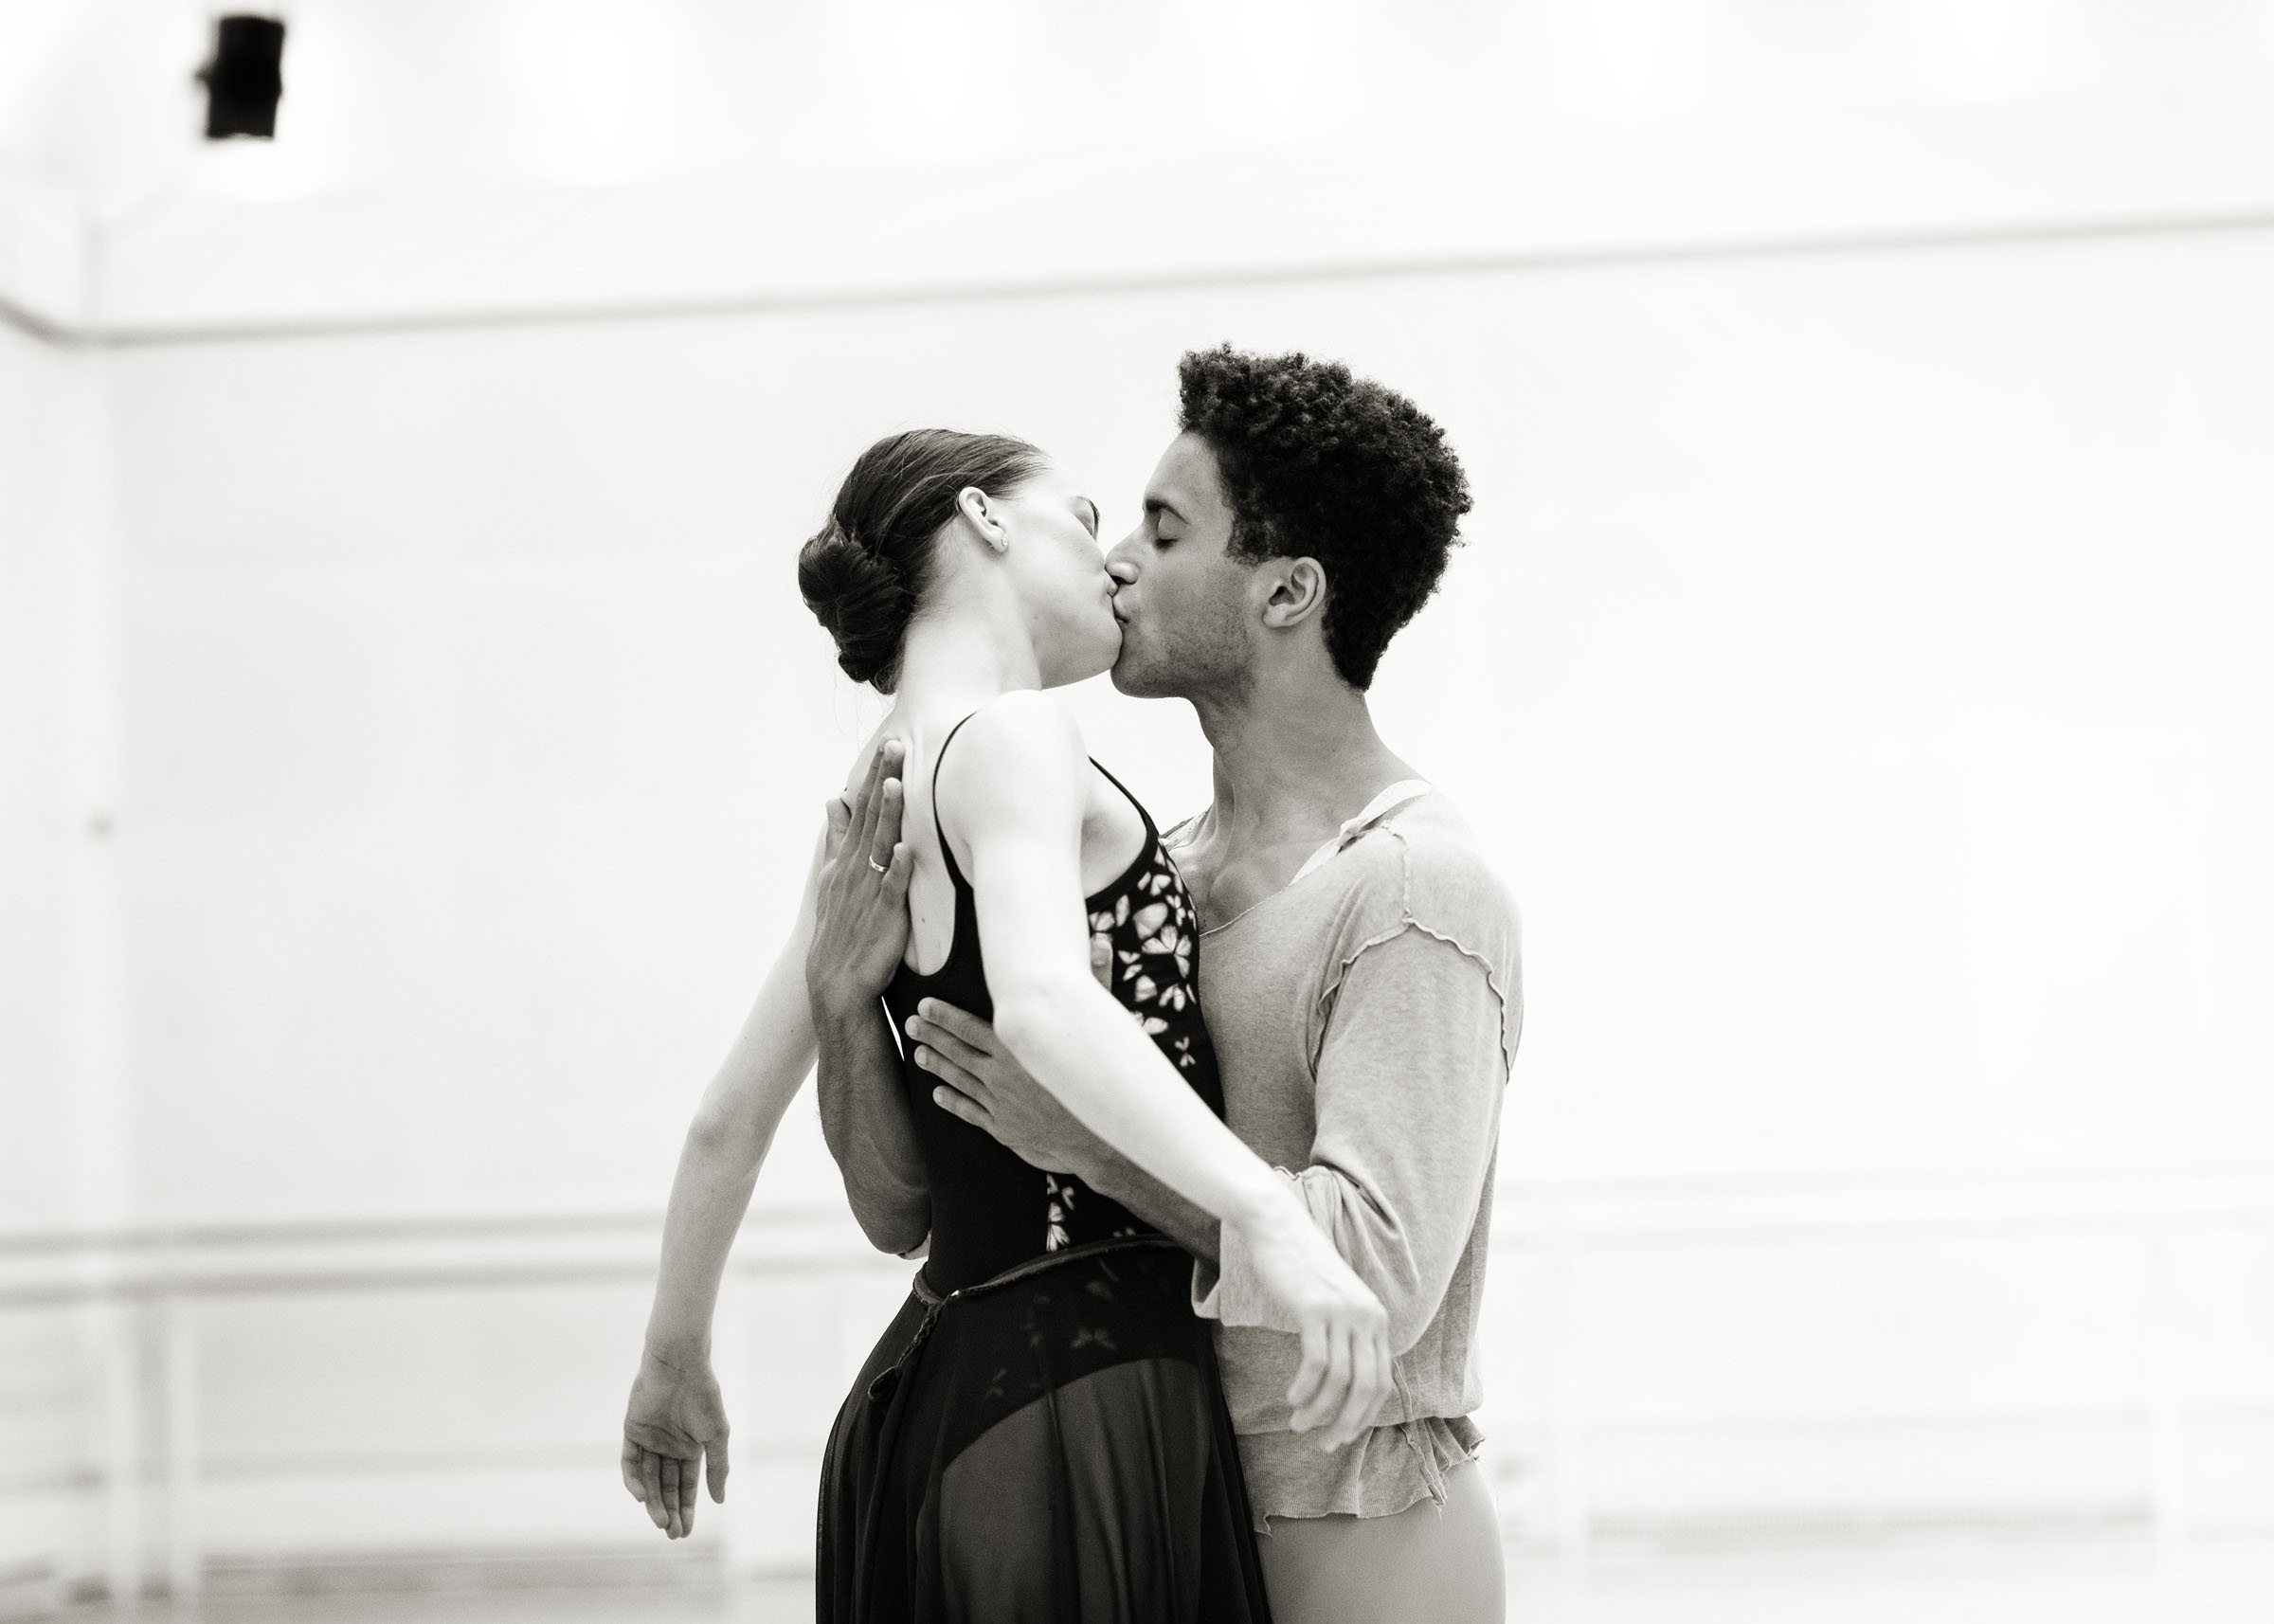 Anna Rose O'Sullivan and Marcelino Sambé kiss in rehearsal for Romeo and Juliet